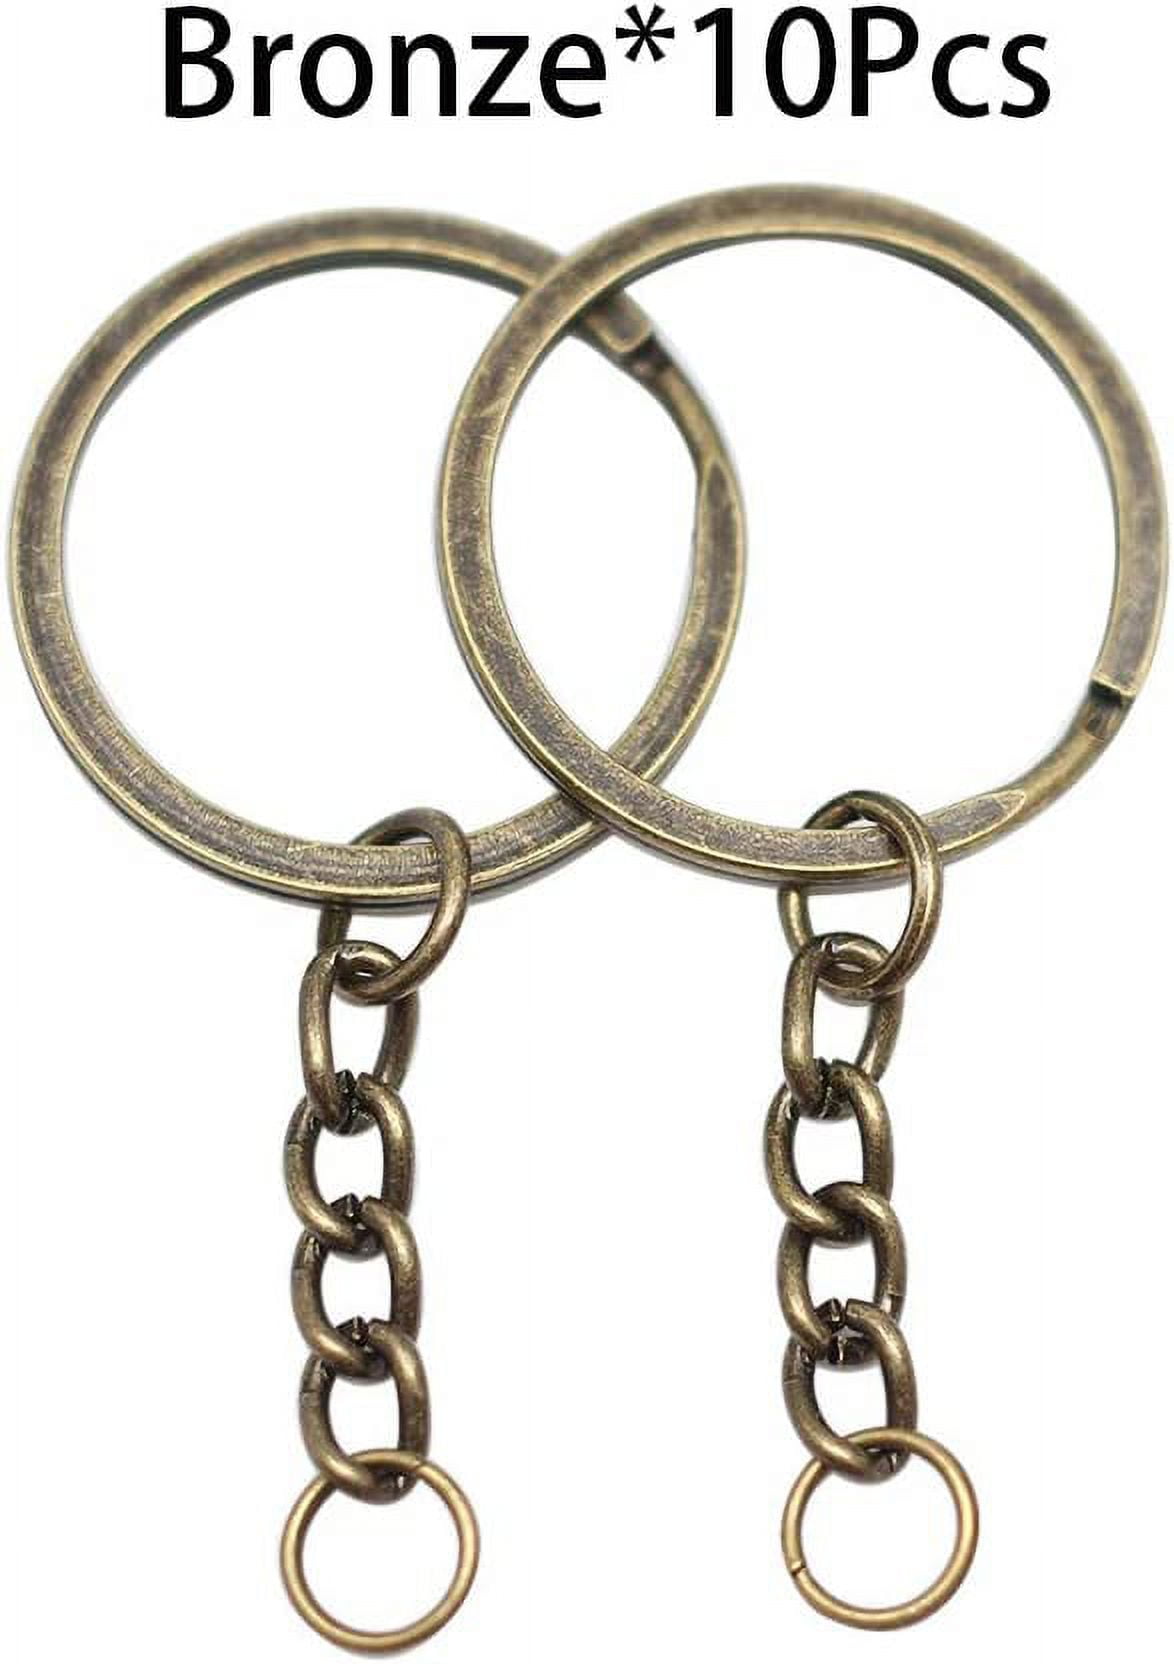  Ciieeo 10pcs Split Spring Buckle Key Rings Key Chain Rings  Vintage Keys Metal Keychain Key Ring Clasp Carabiner Keychain Key Chain  Making Ring Key Chain Making Supplies Split Type Pendant